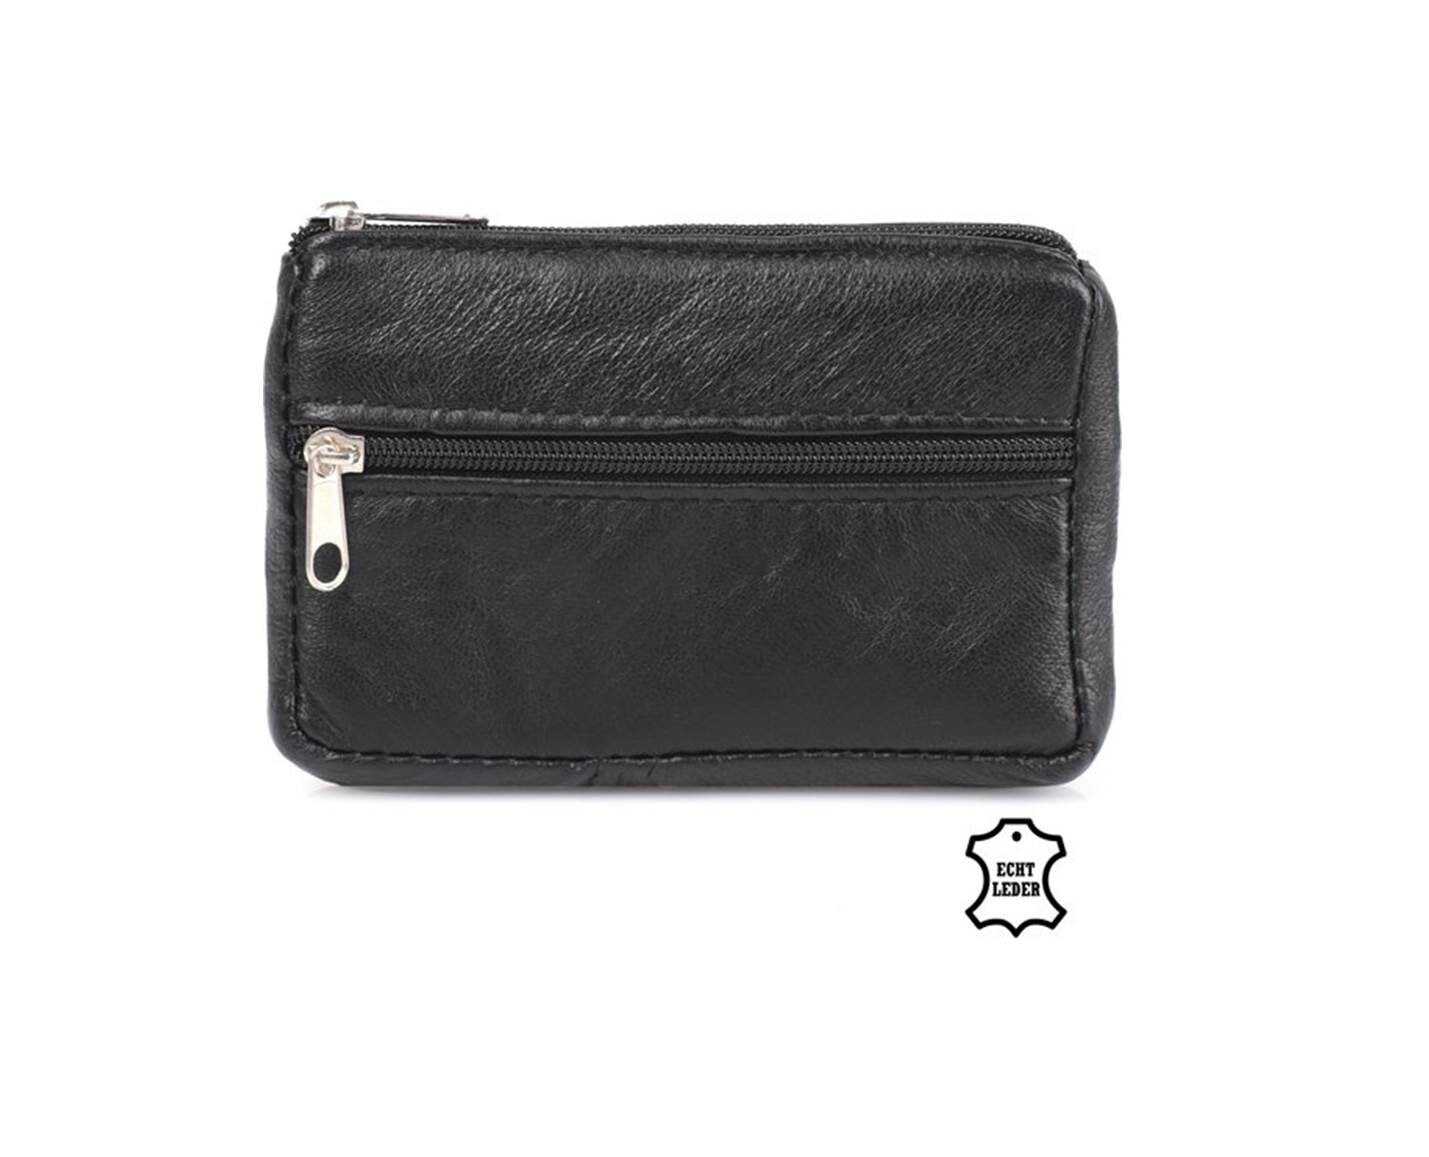 Tassen & portemonnees Tasjes & Miniportemonnees Make-up Tas Coin Portemonnee Gadget Case Black Cat Fabric Zipped Pouch 